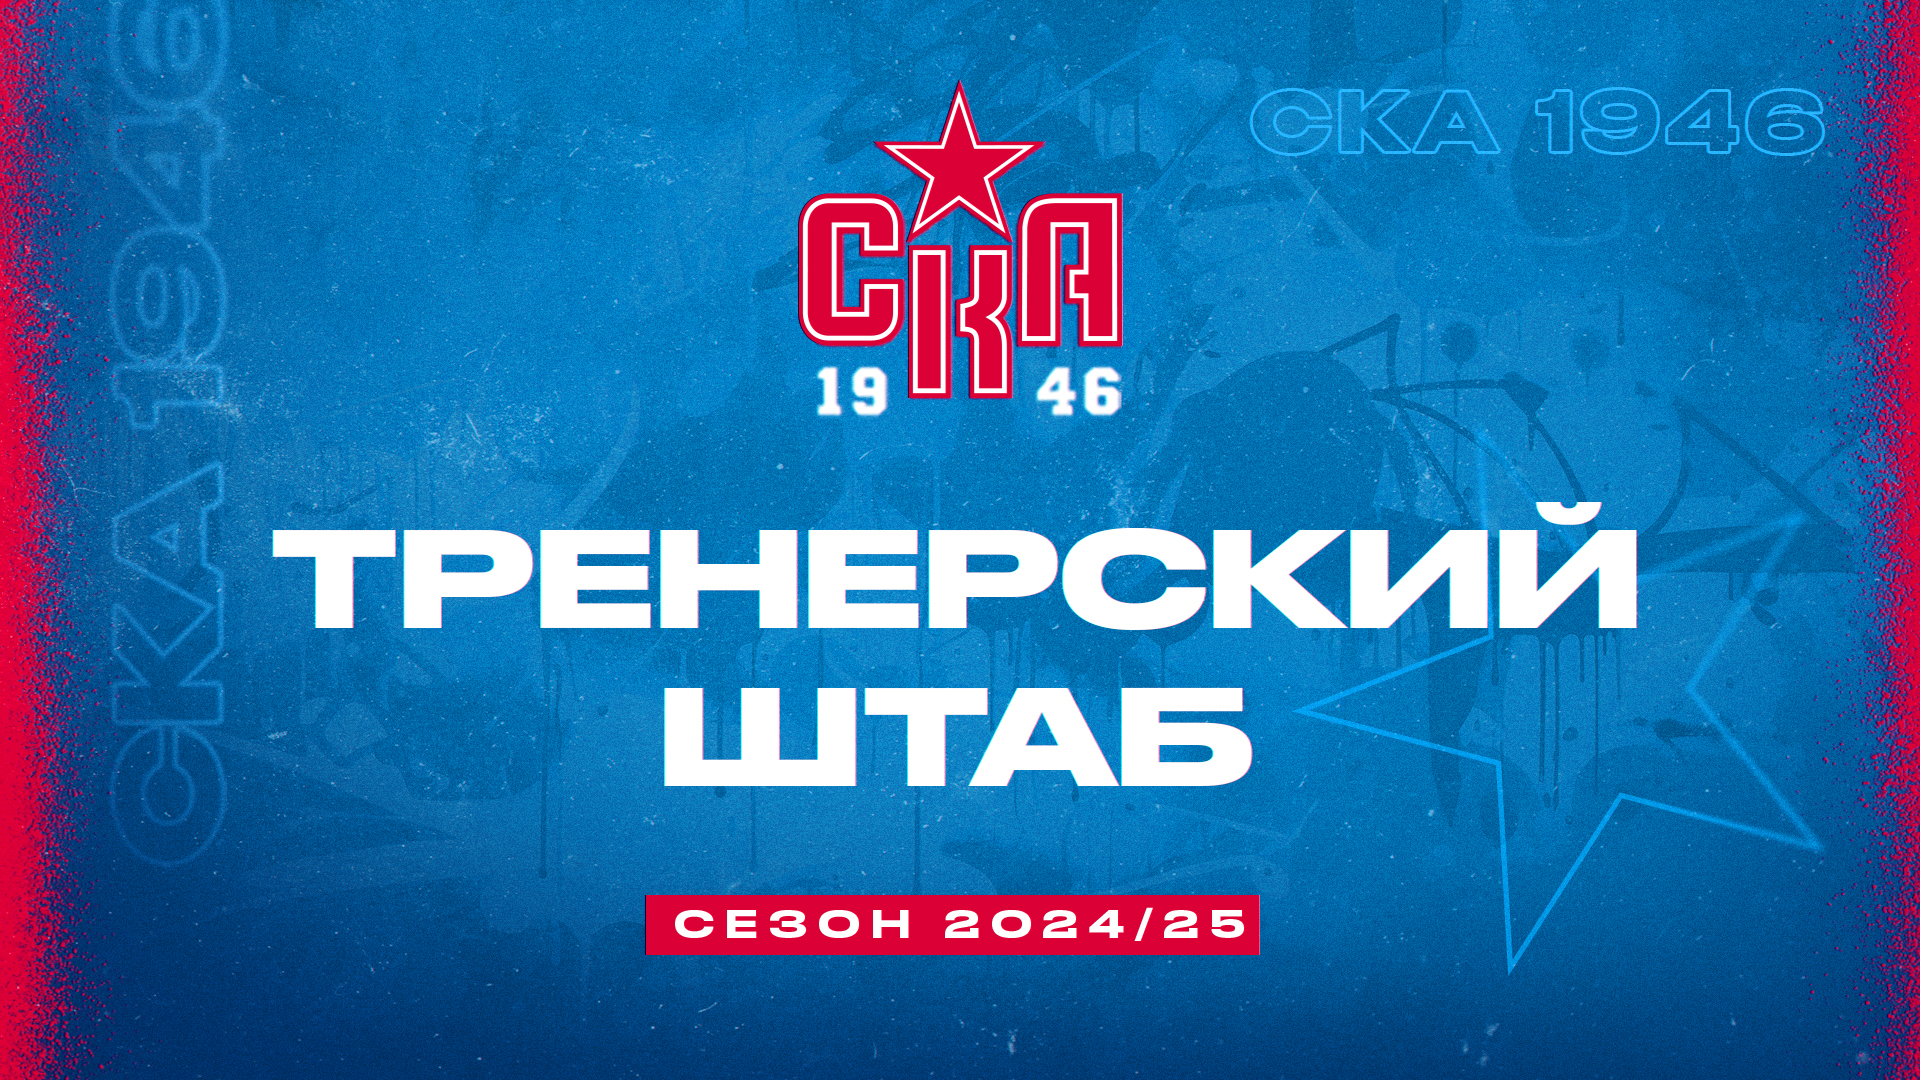 Тренерский штаб "СКА-1946" в сезоне 2024/25